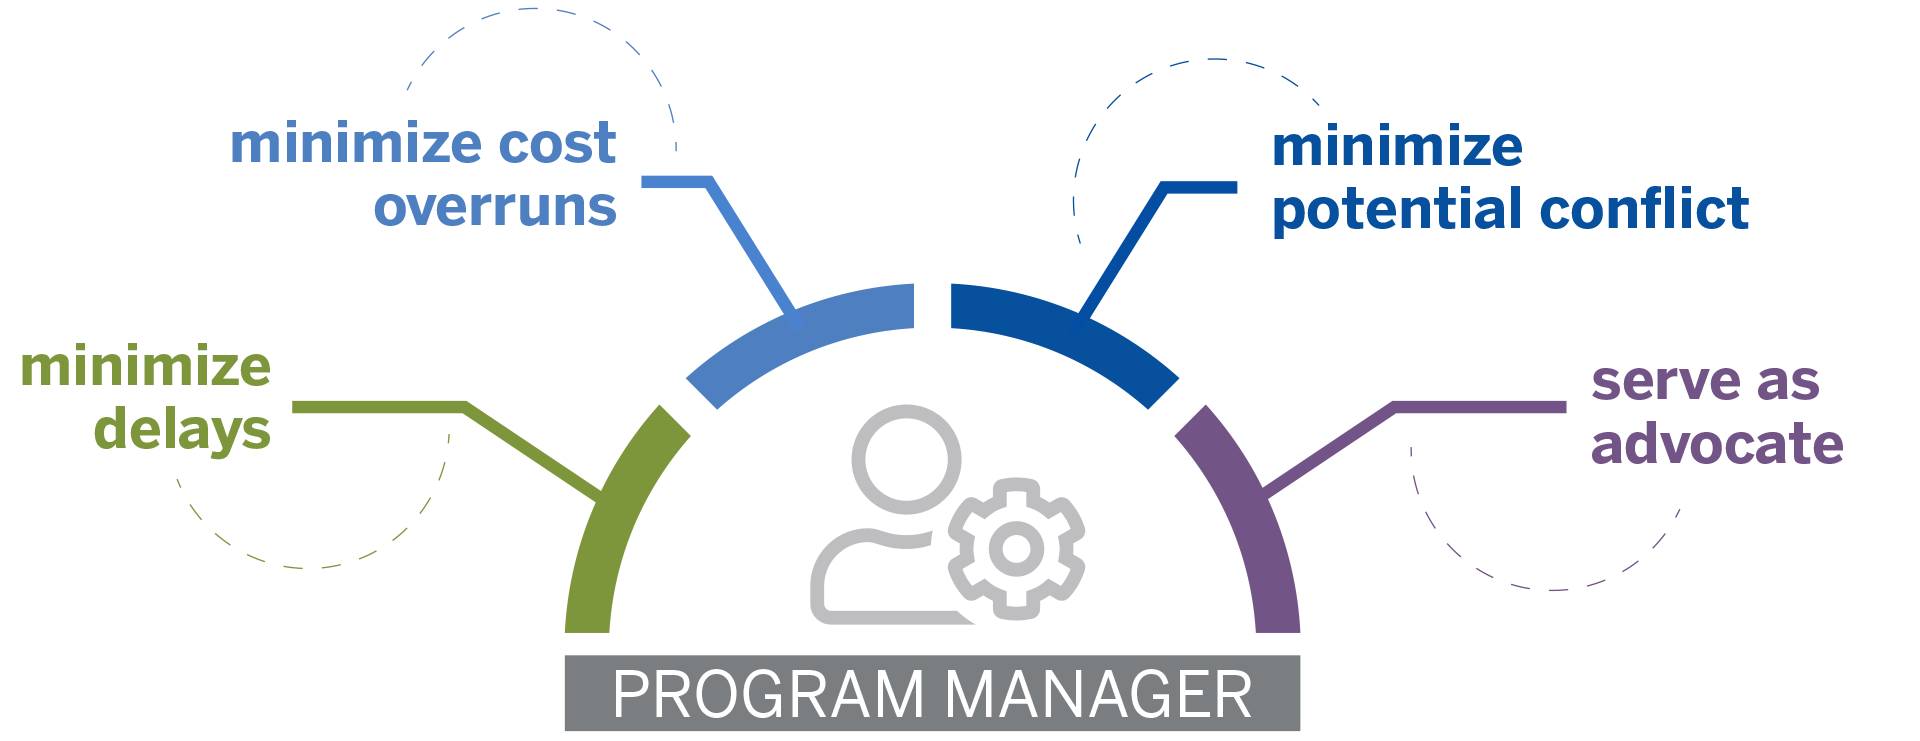 Program manager benefits